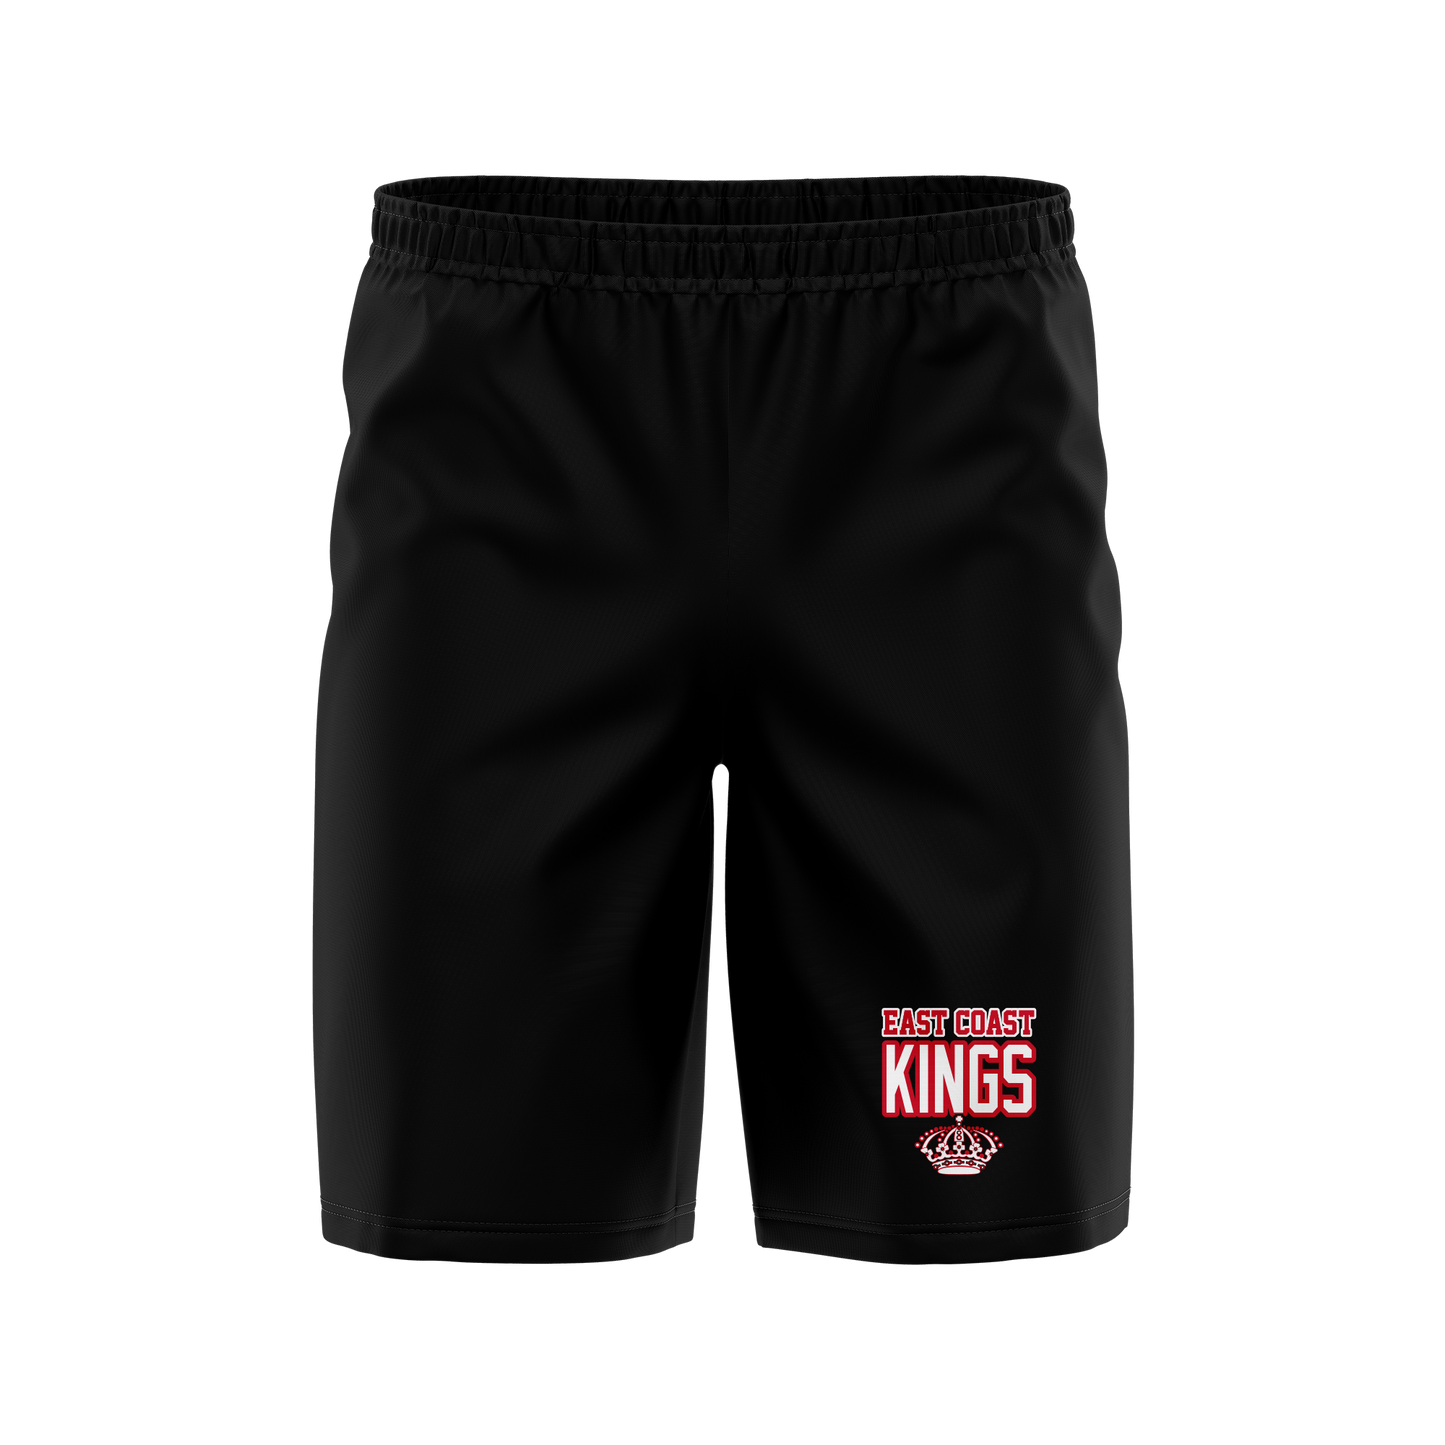 East Coast Kings Black Mesh Shorts